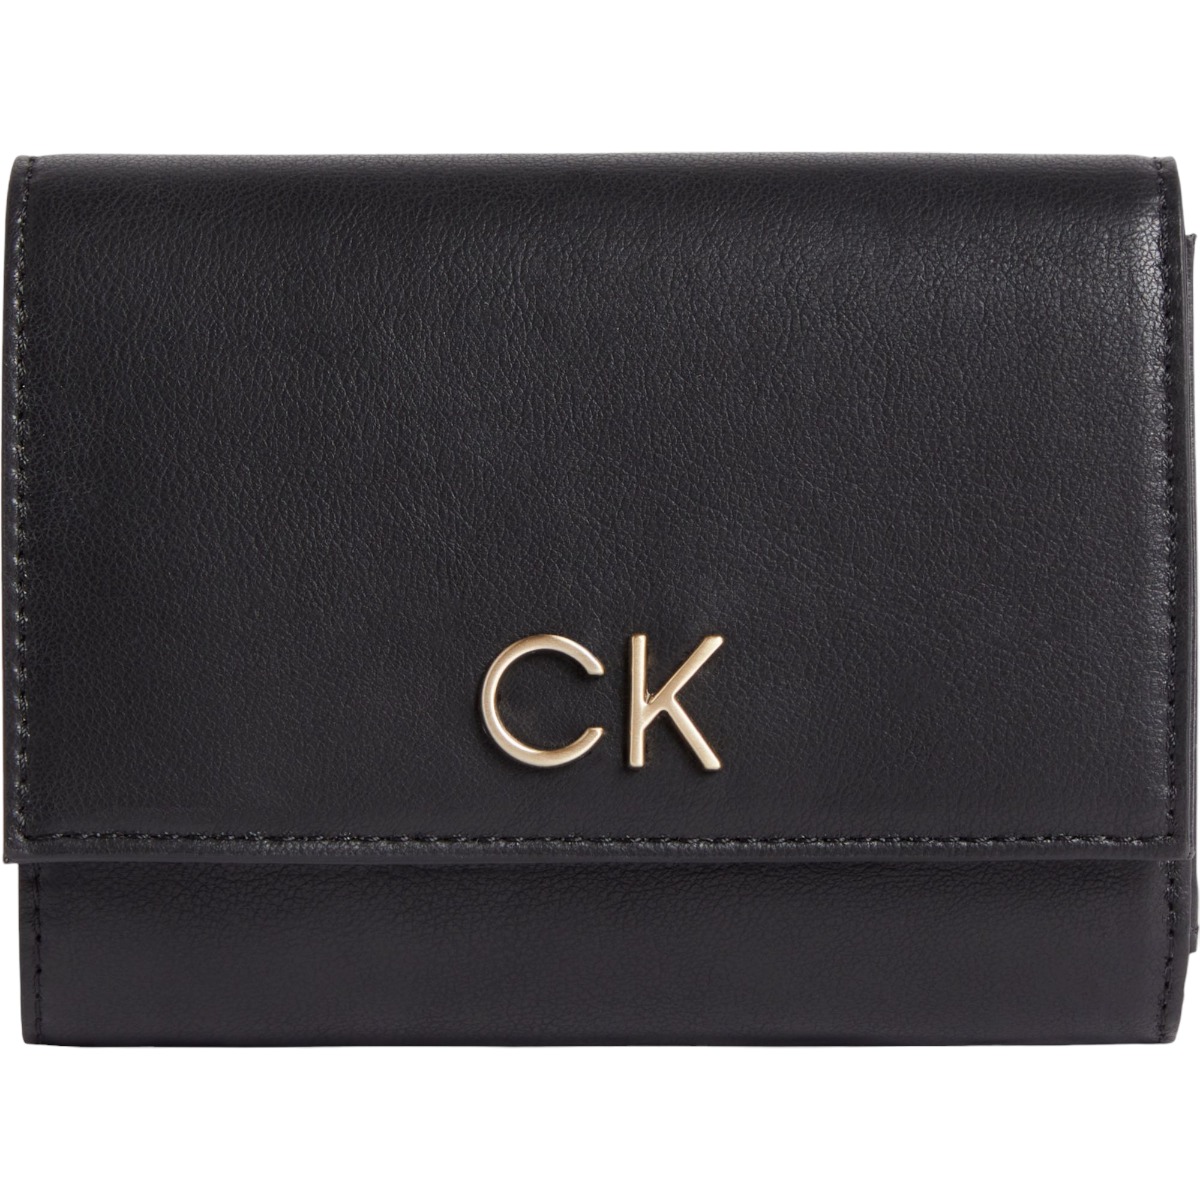 Calvin Klein Woman's Wallet 8720108596138